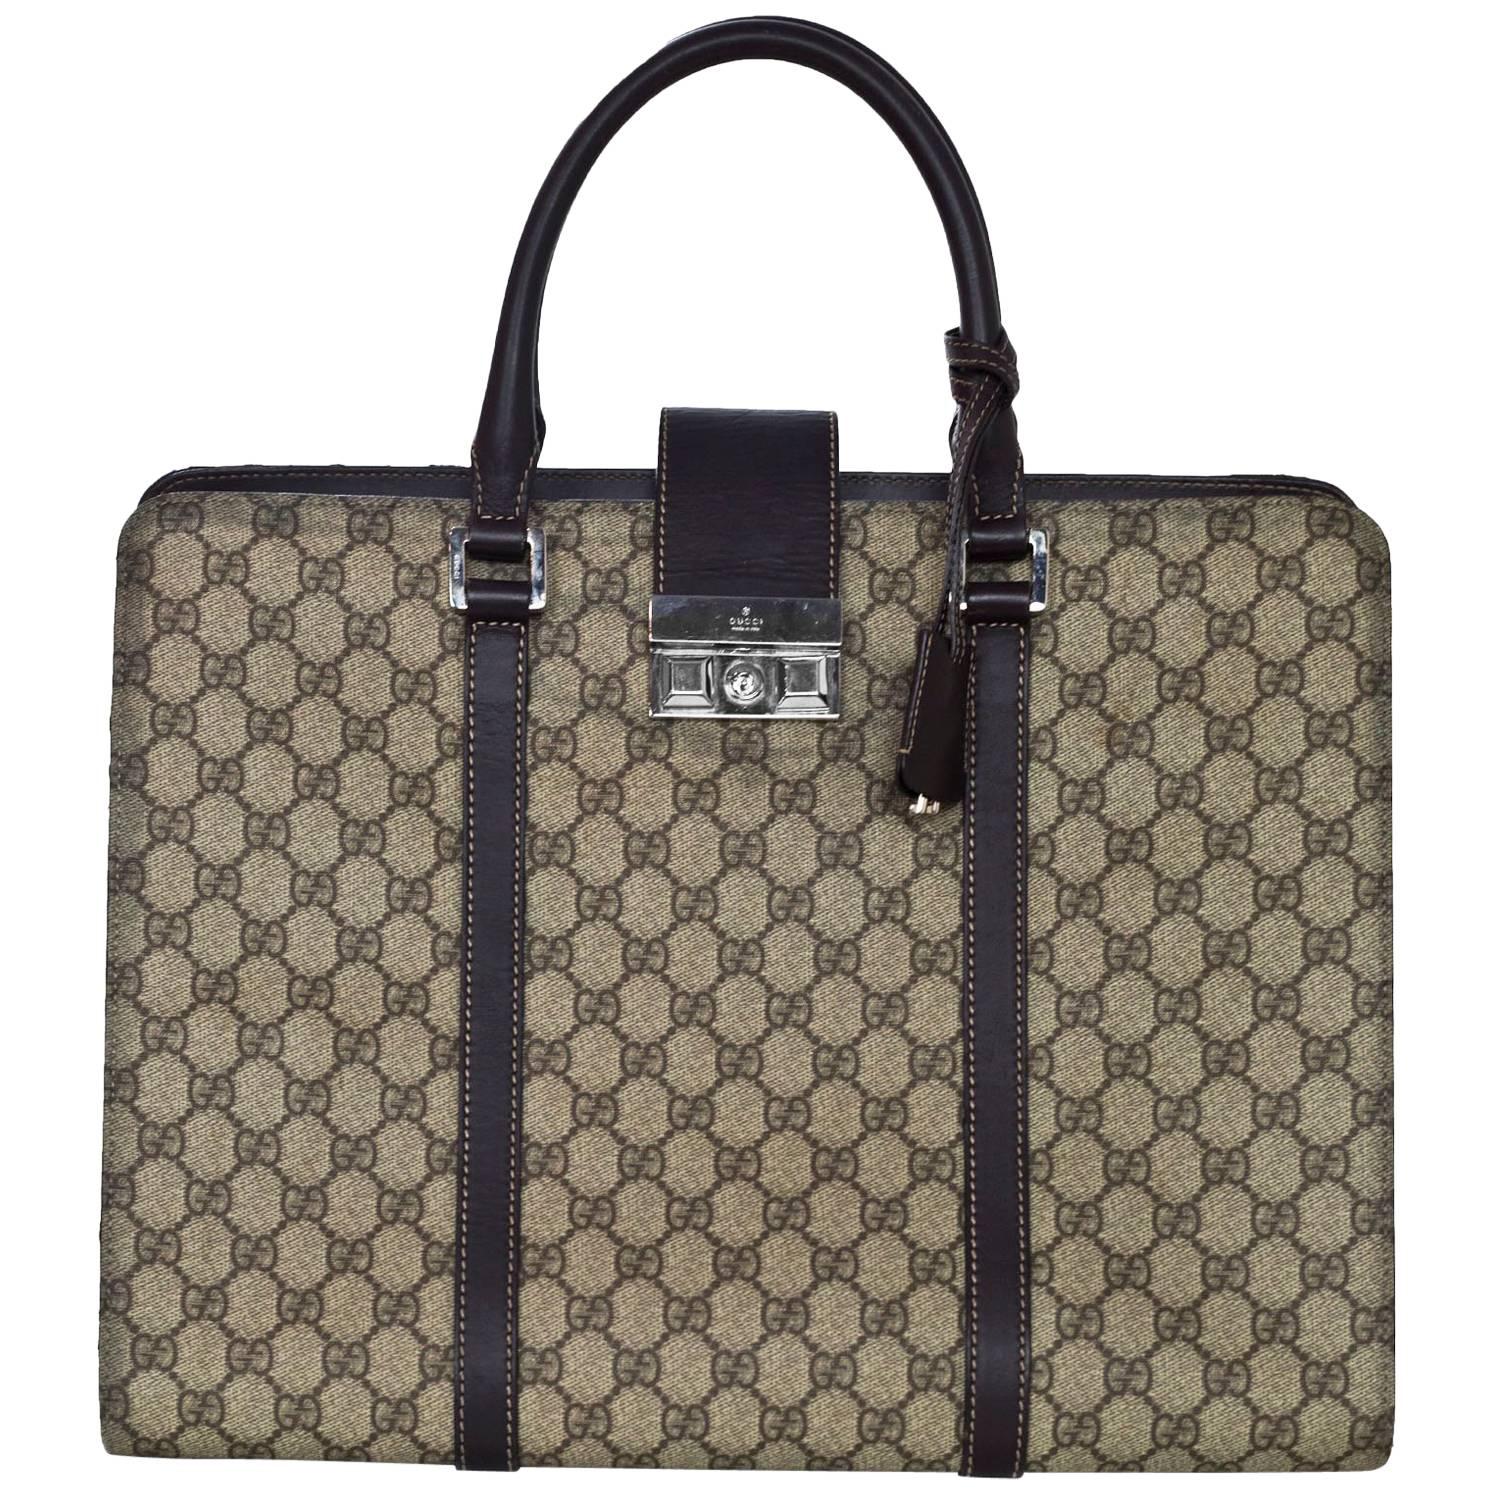 Gucci Monogram Canvas GG Supreme Briefcase/Laptop Bag